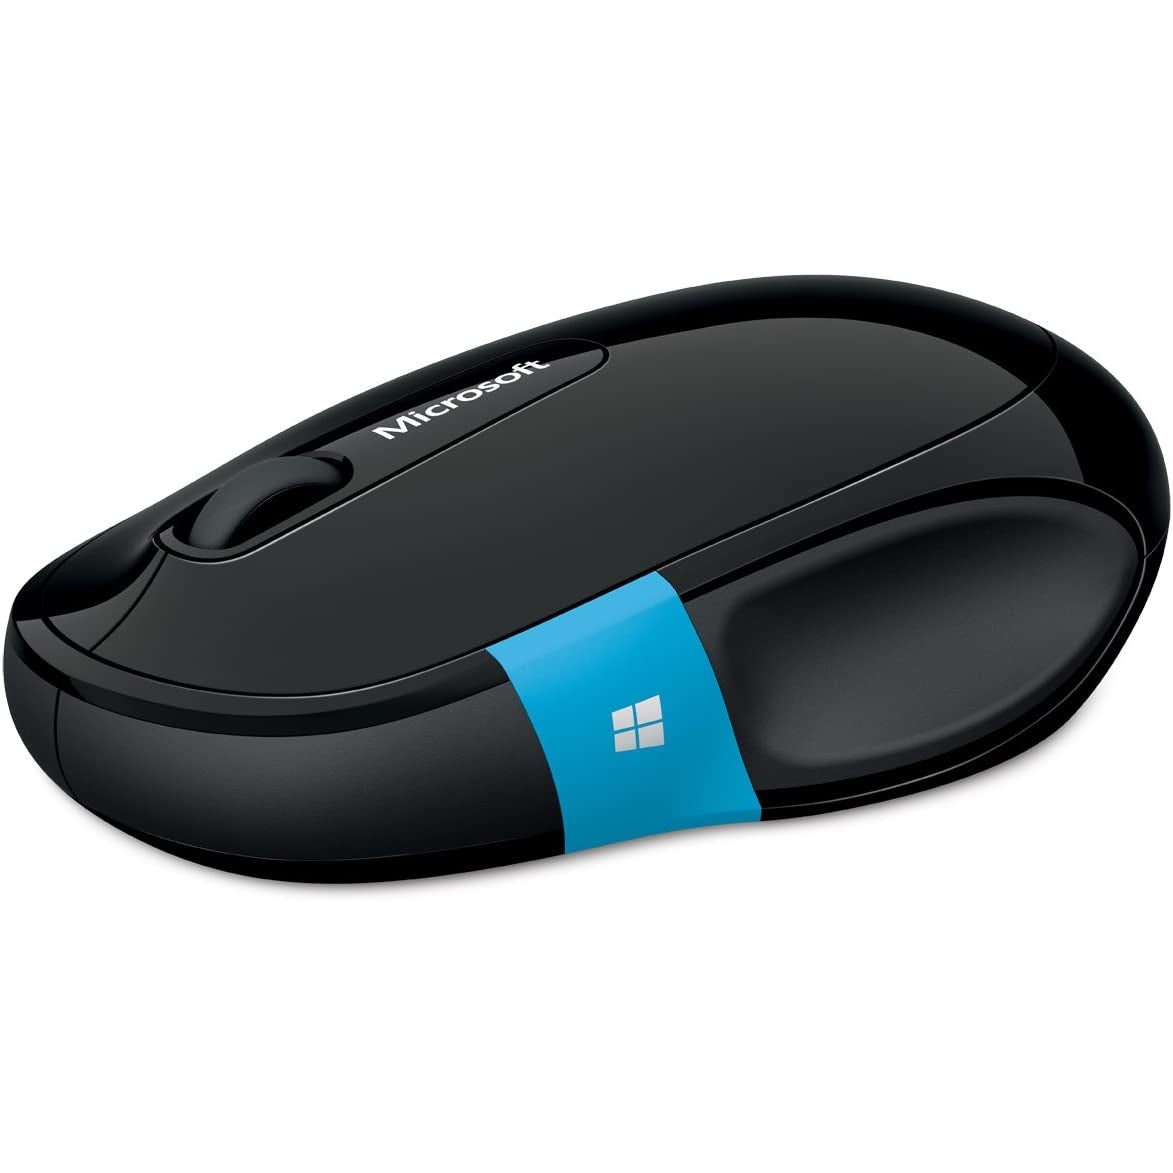 Microsoft Sculpt Comfort Wireless Mouse - Black